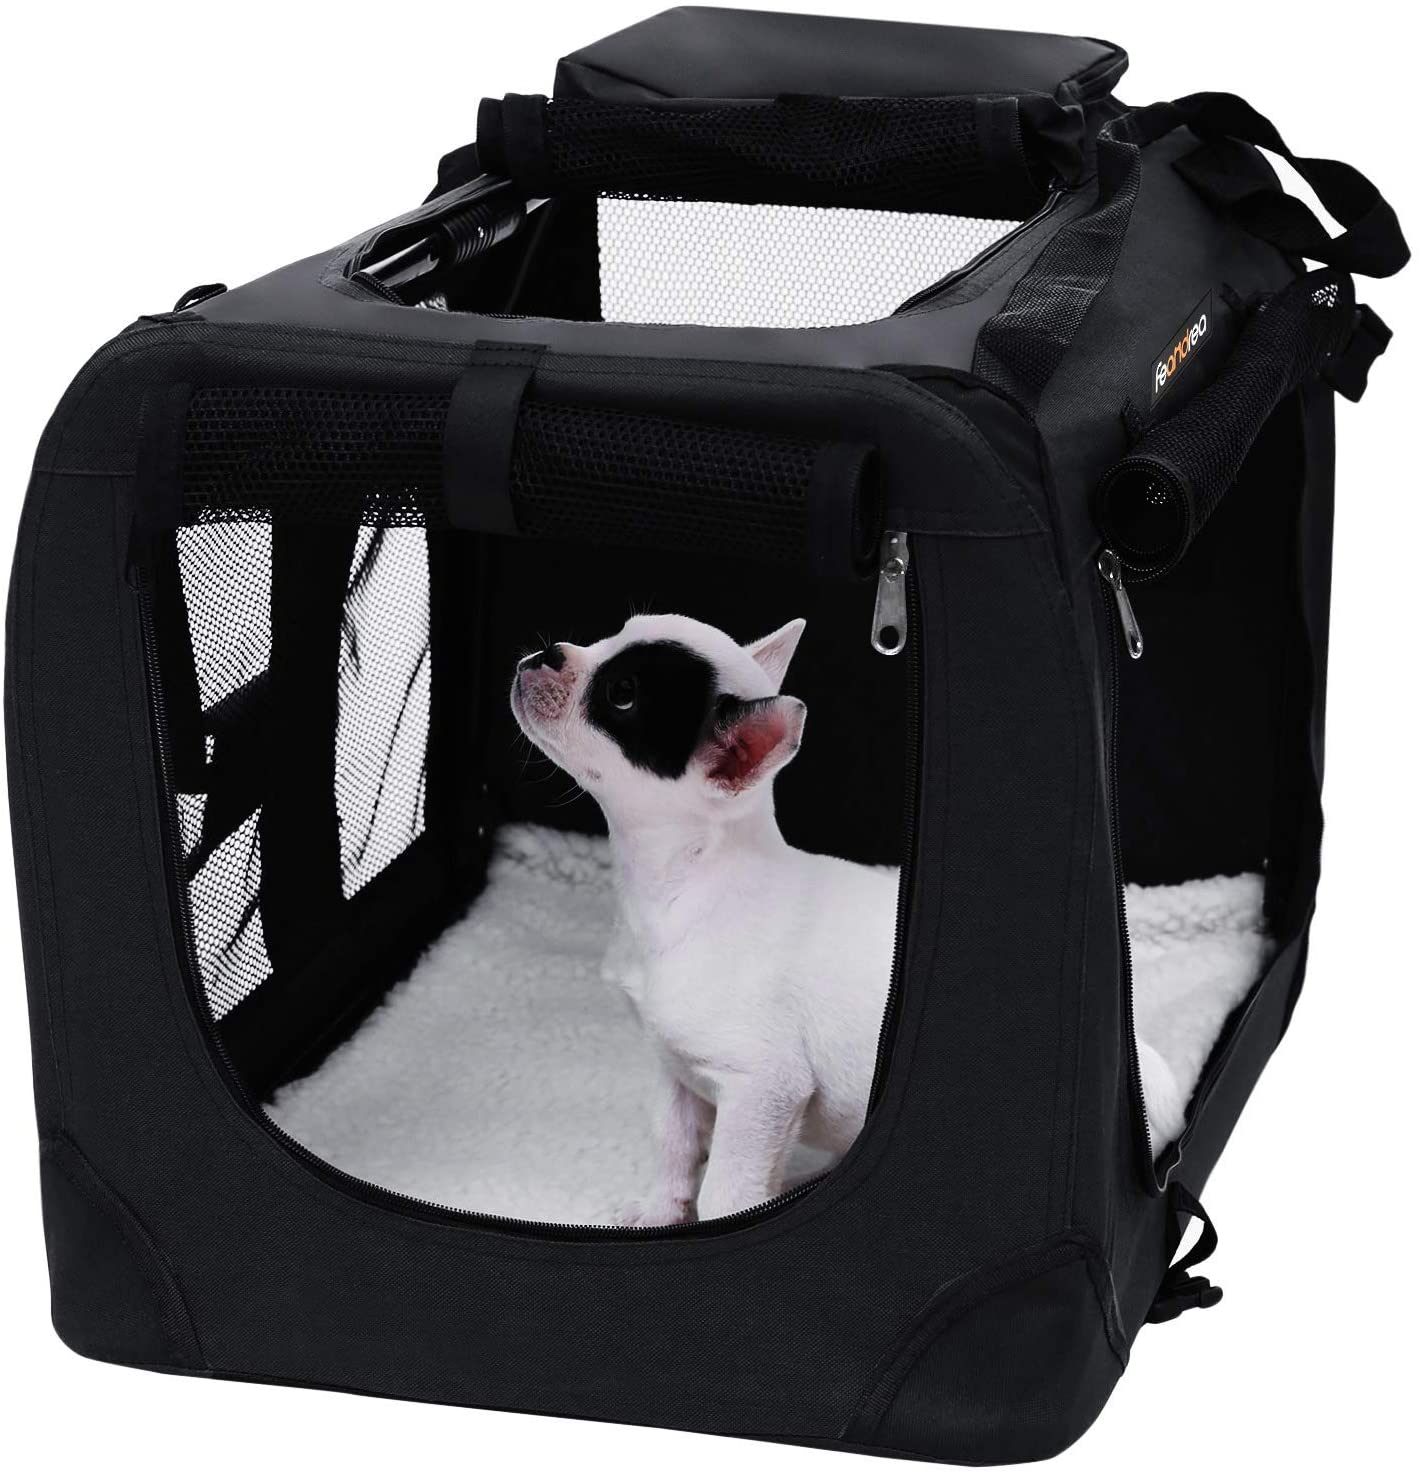  FEANDREA Bolsa de Transporte para Mascotas Transportín Plegable para Perro Portador Tela Oxford Negro S 50 x 35 x 35 cm PDC50H 